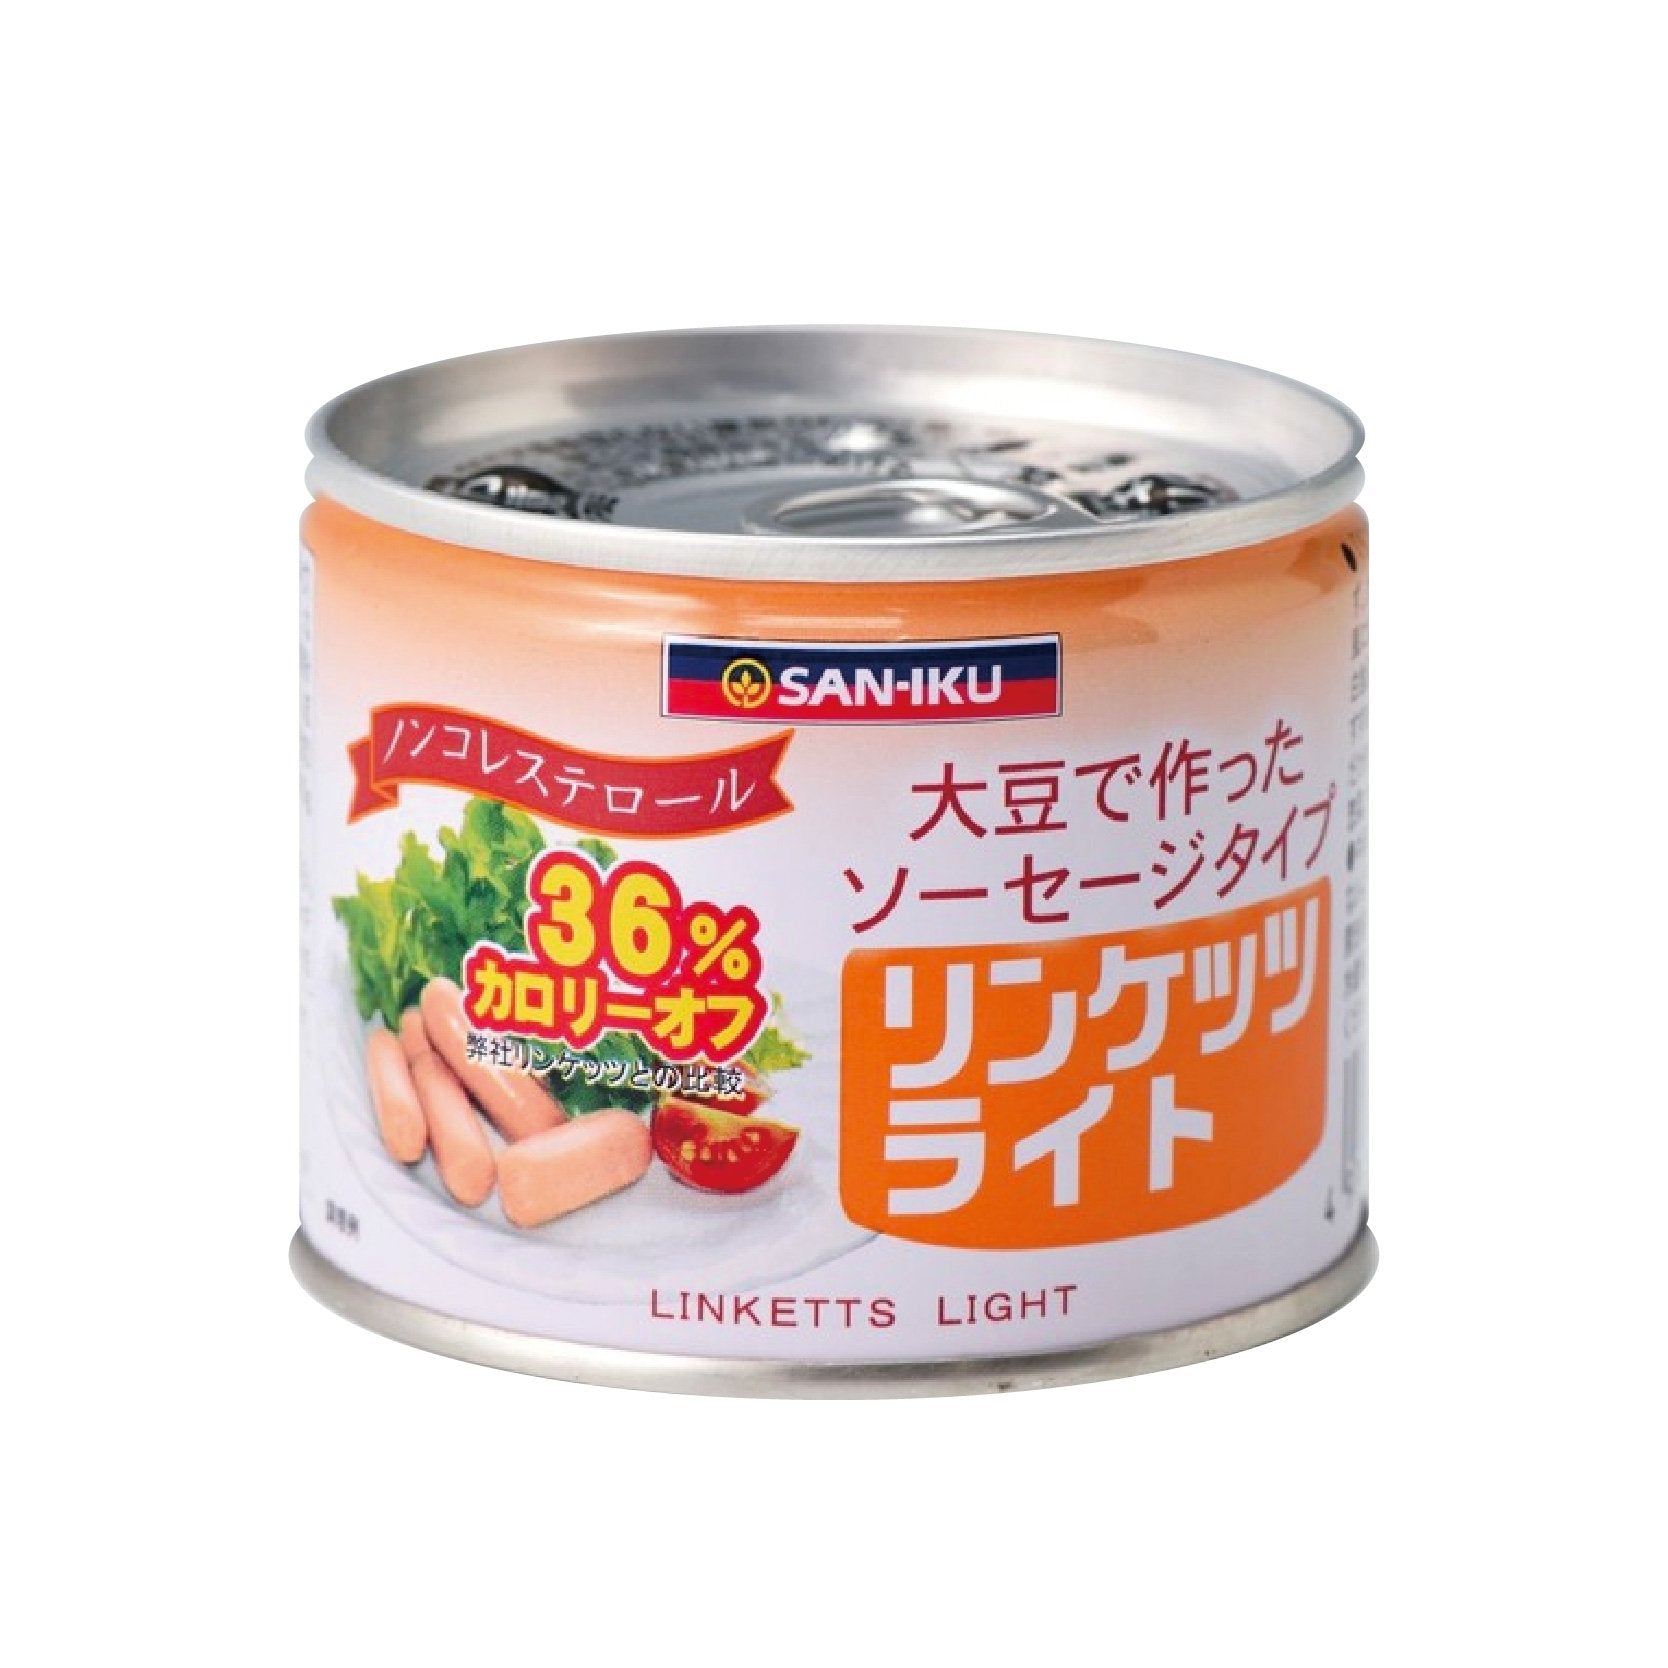 Saniku 罐裝素香腸 [190克]